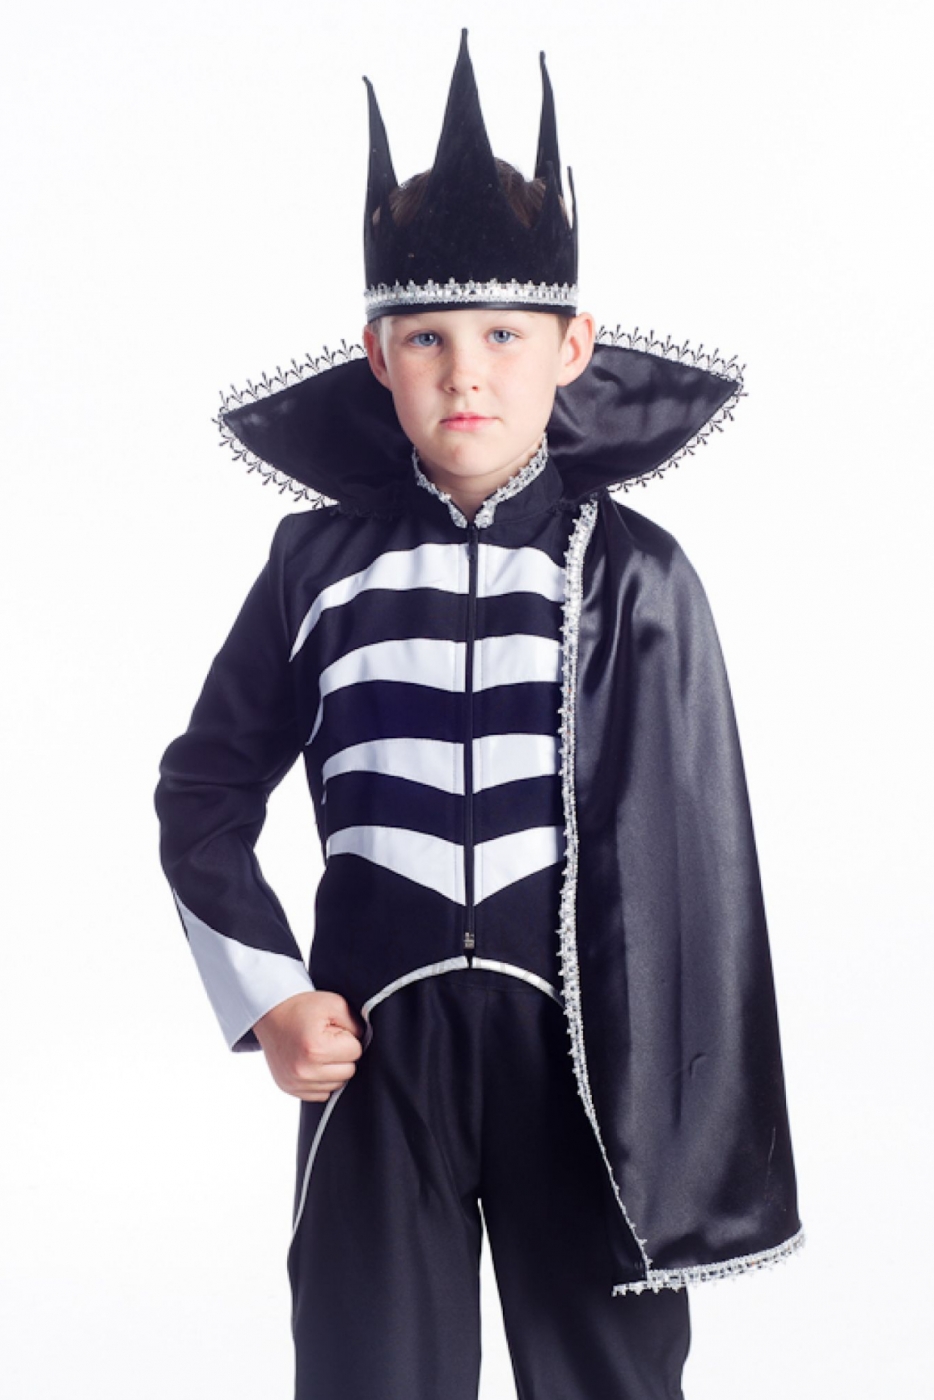 Kaschey the Deathless Scrag man costume for little boy